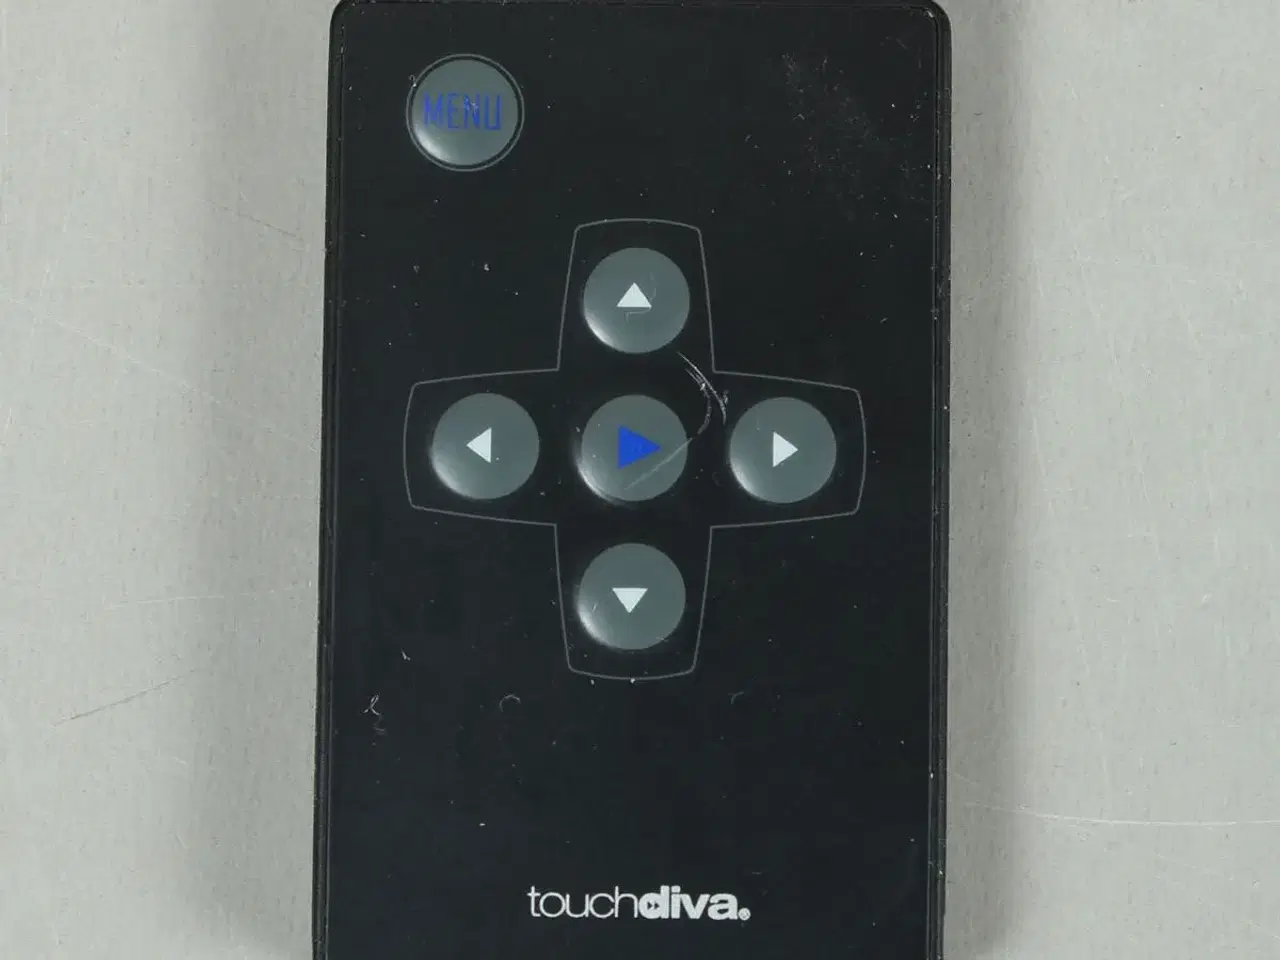 Billede 2 - Netværksafspiller, Touchdiva Touch diva 